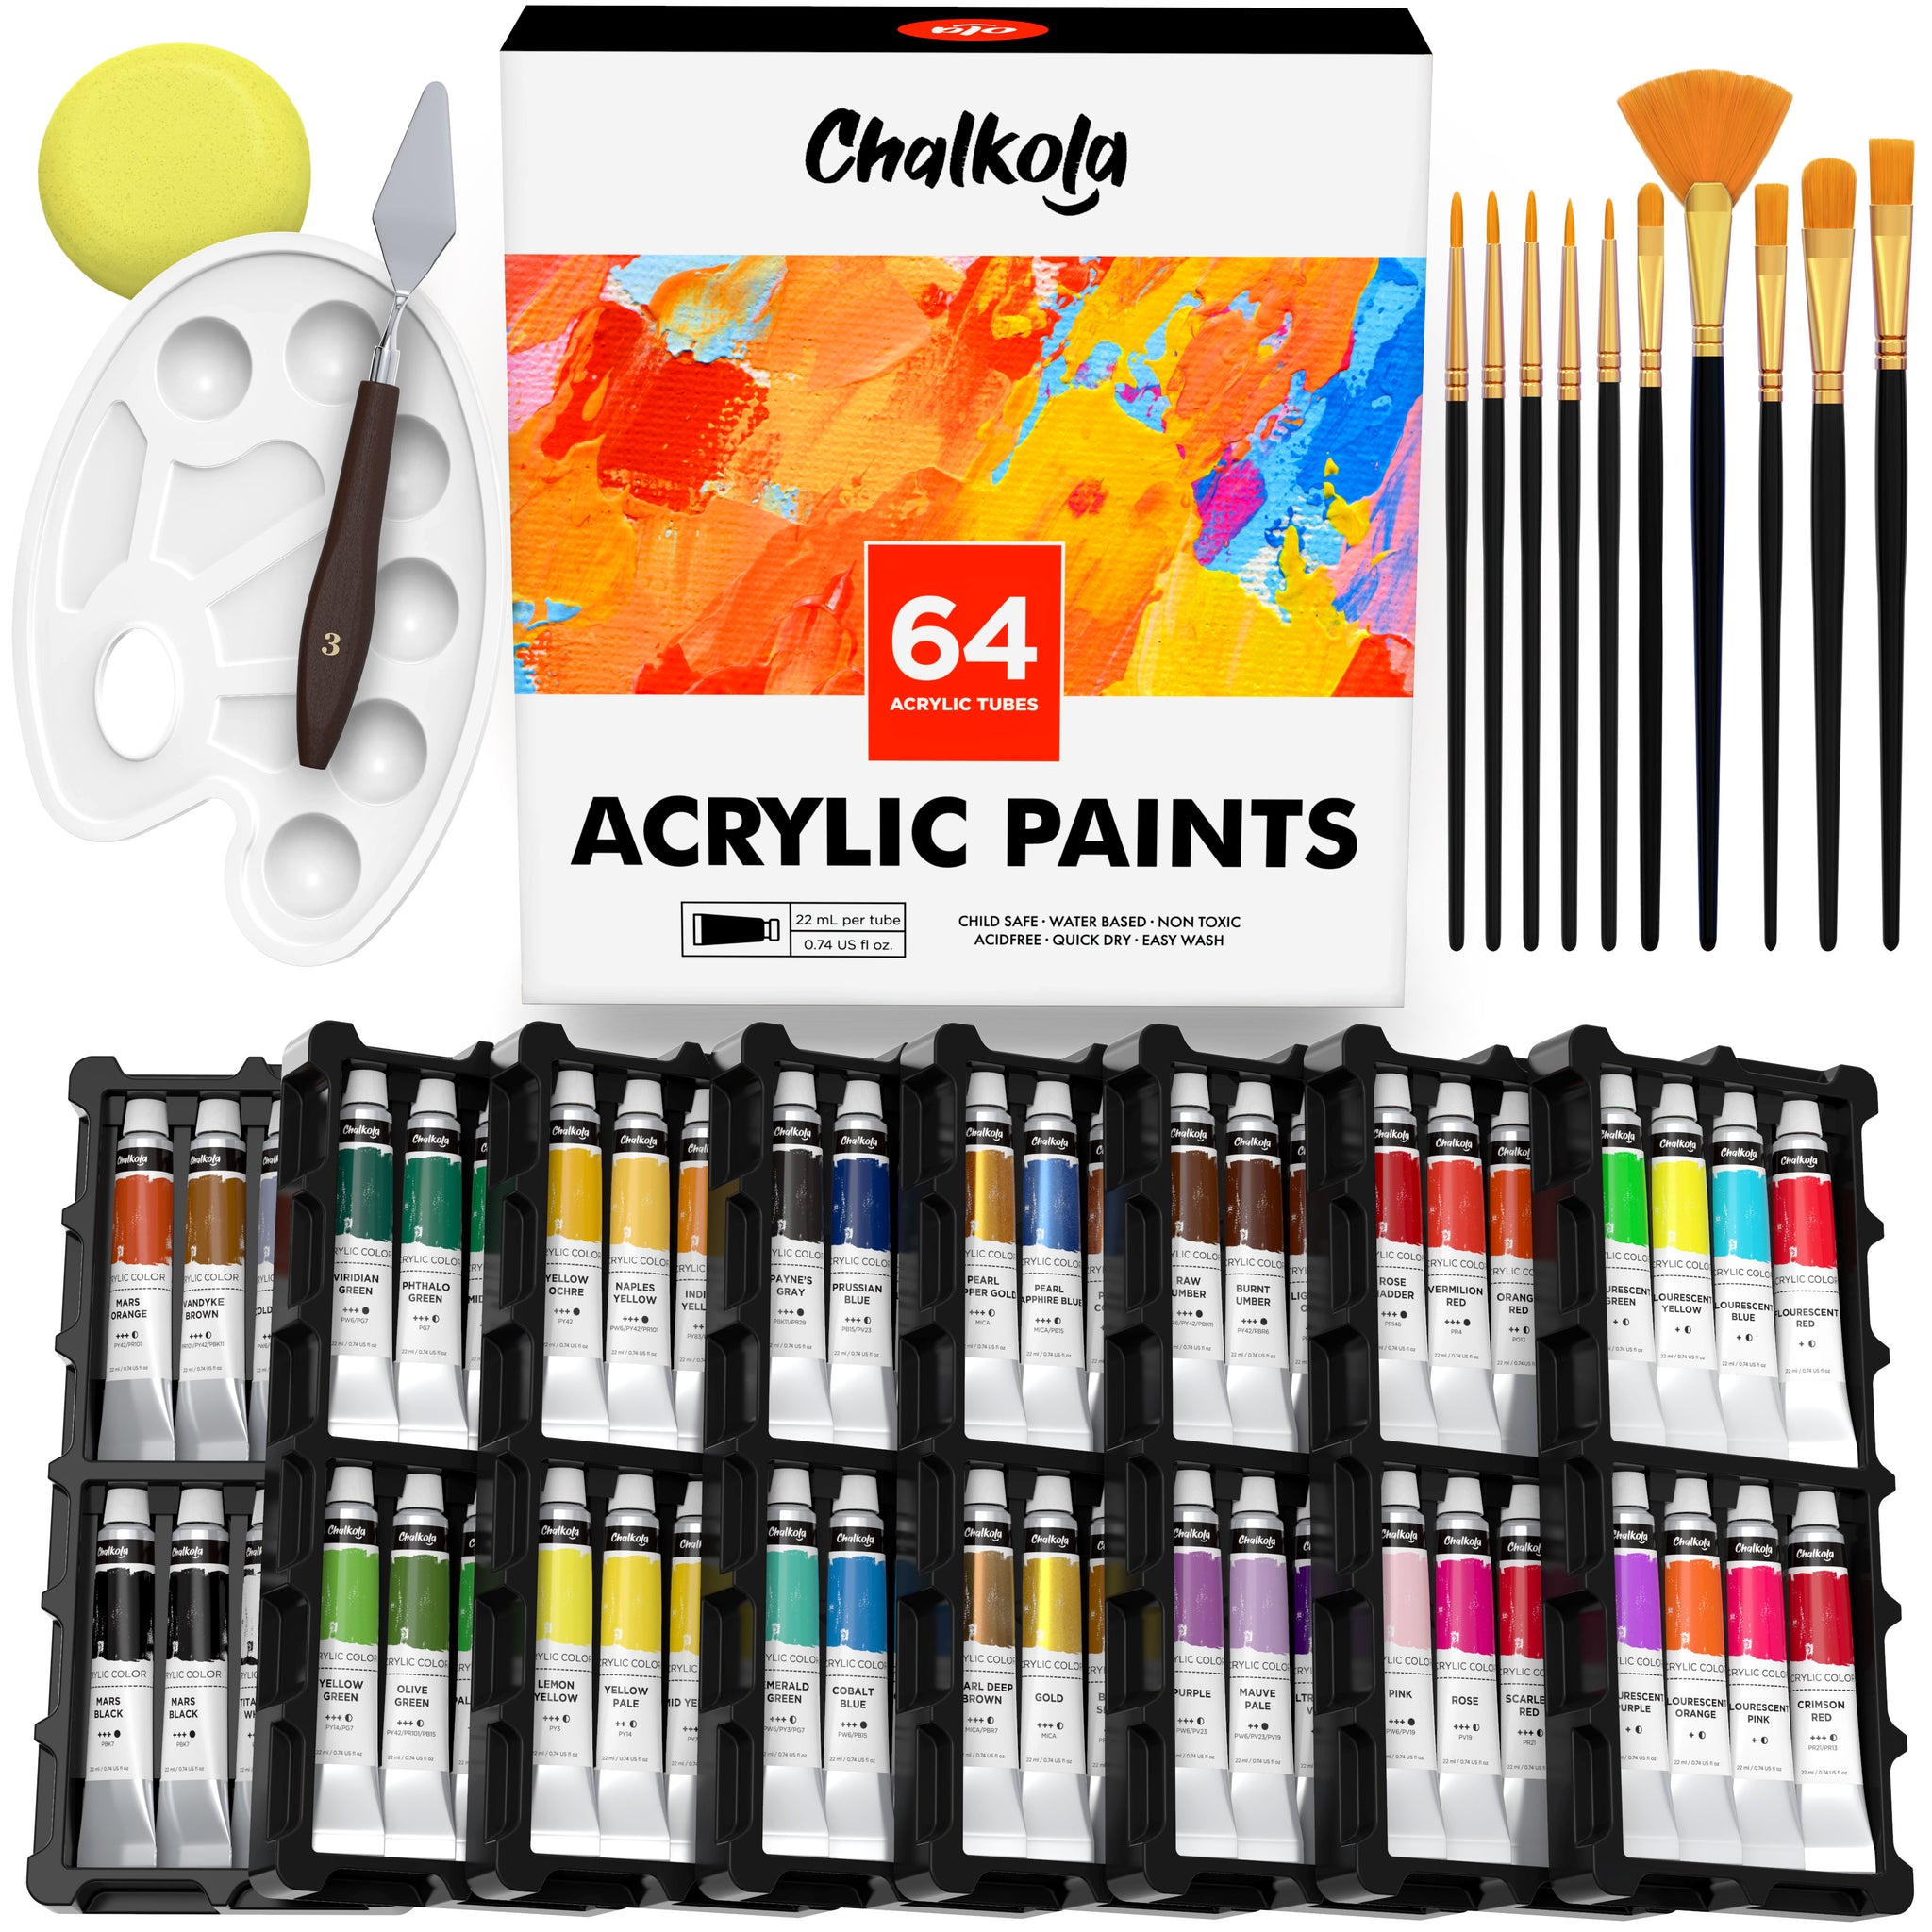 Chalkola chalkola acrylic paint set for adults, kids & artists